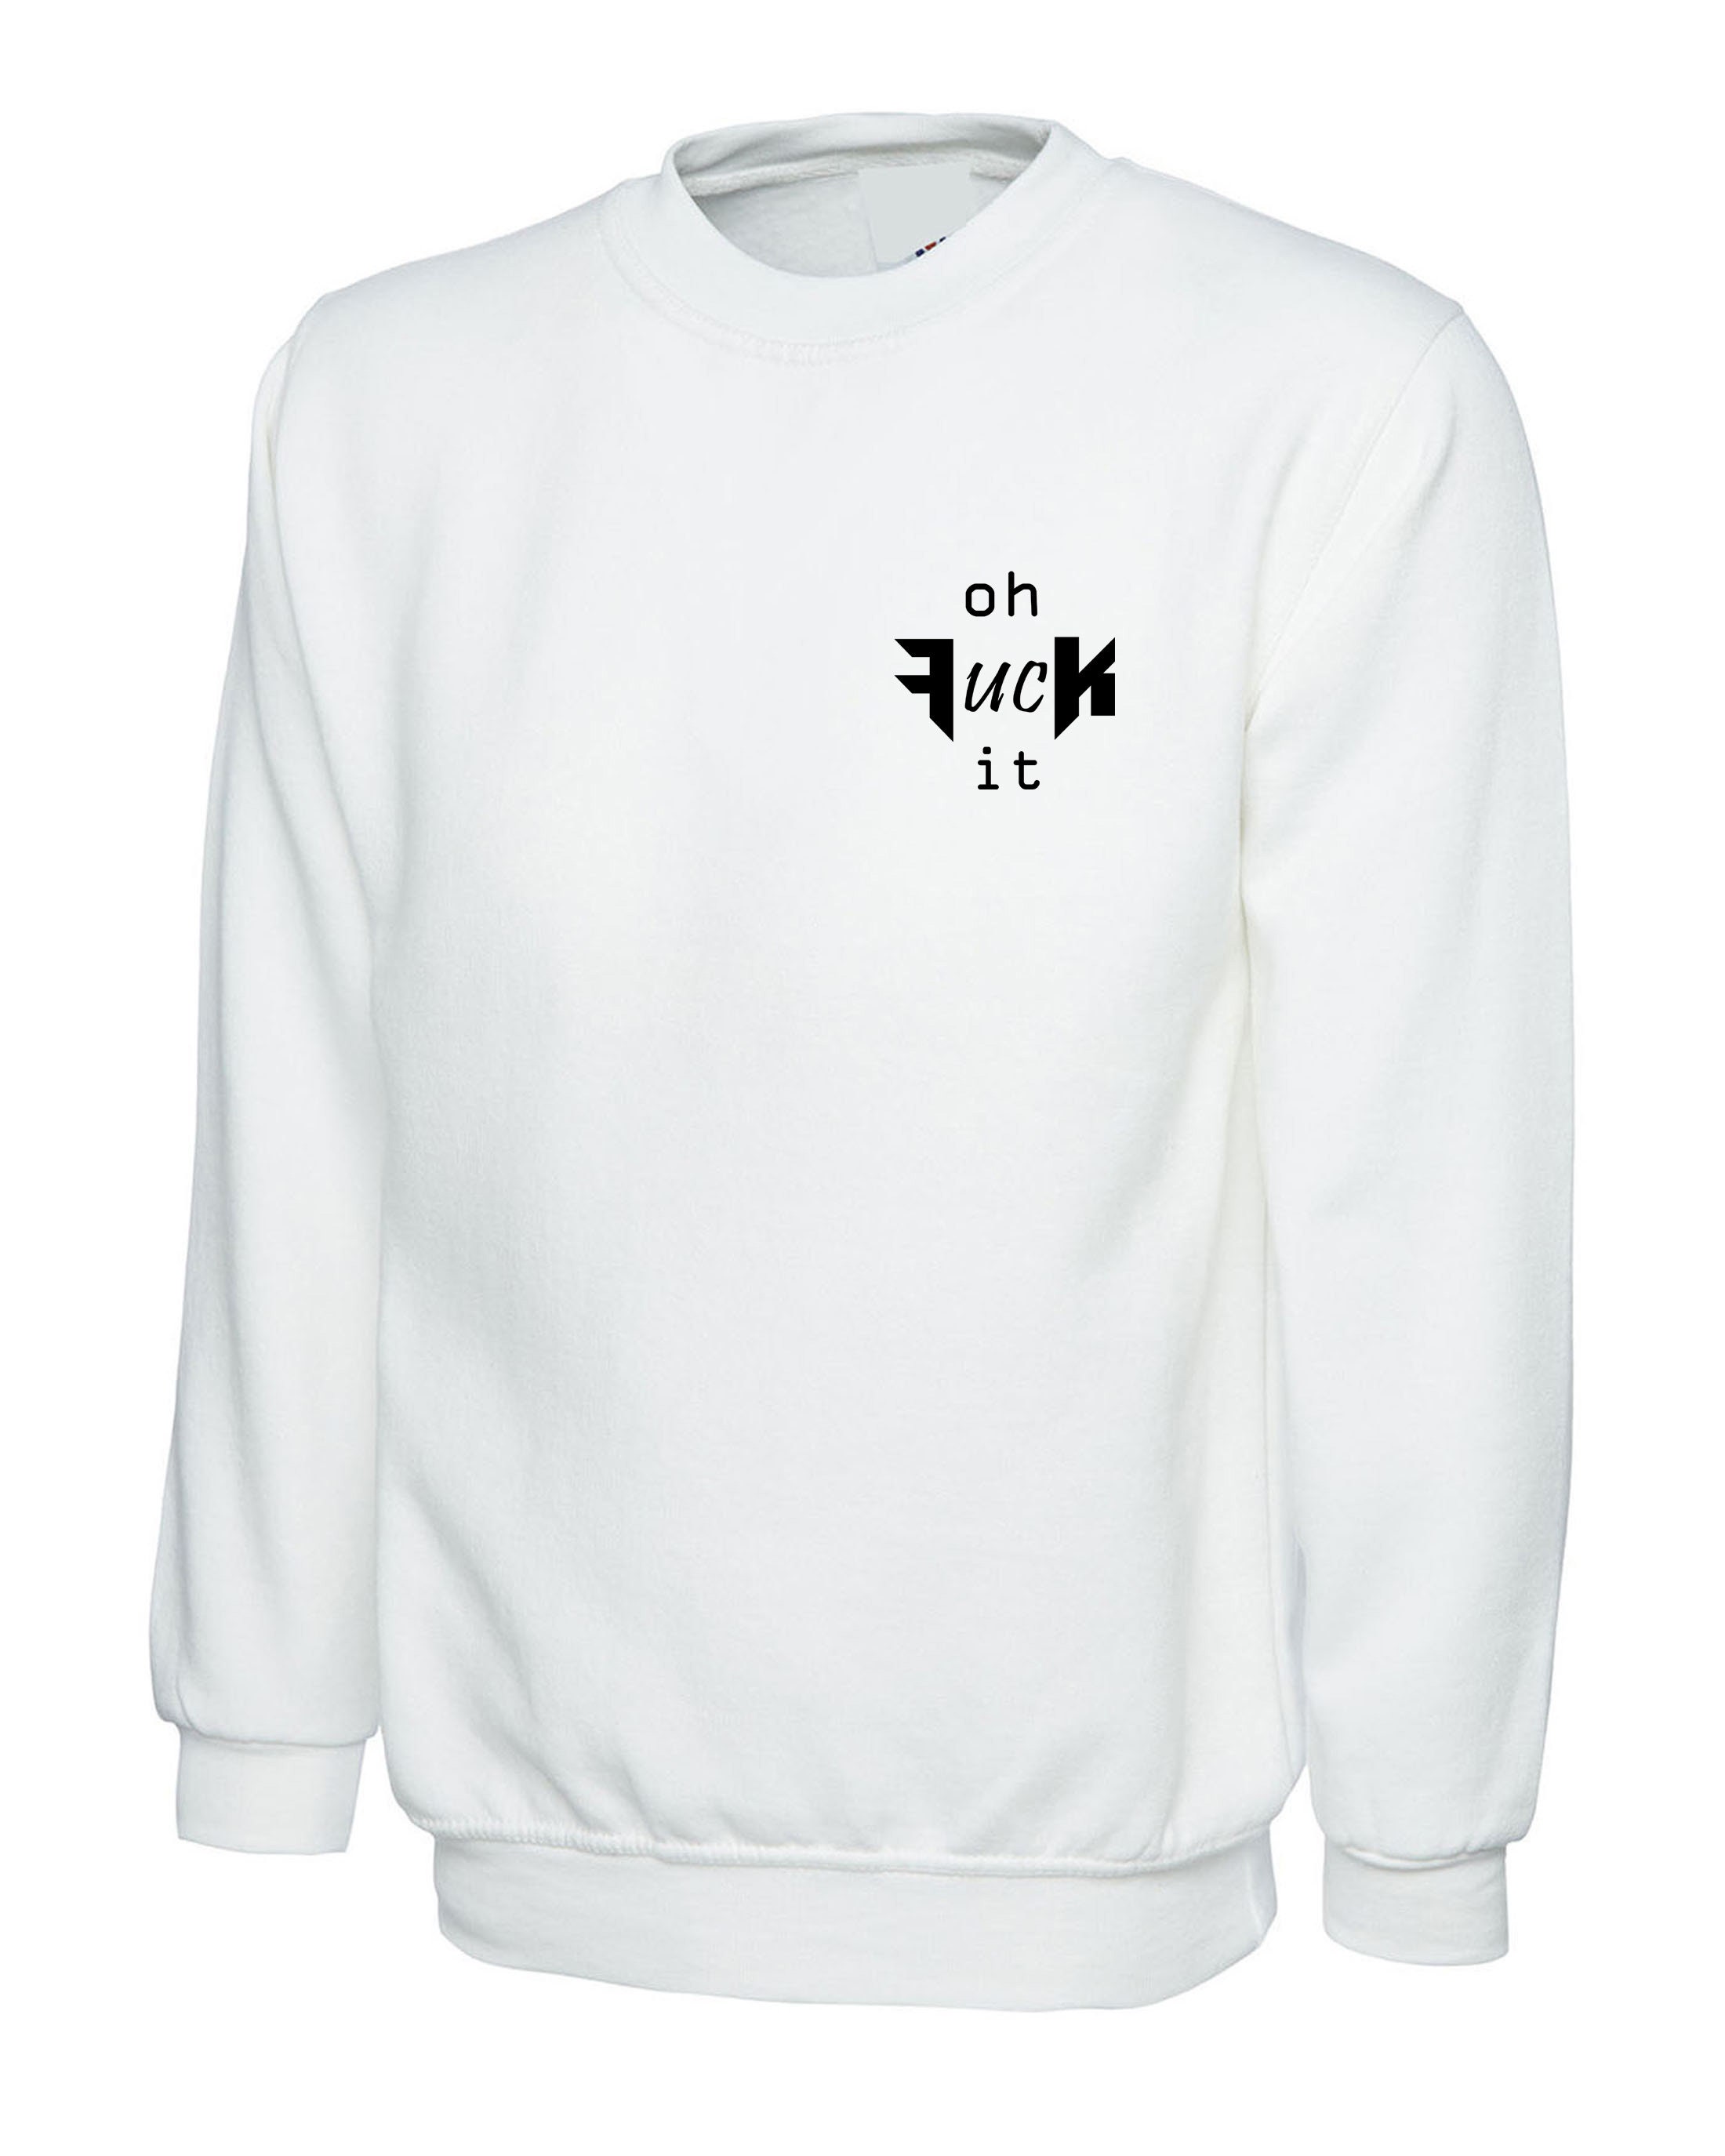 Oh Fuk It Sweatshirt Jumper Sweater Shirt Top Funny Rude - Etsy UK